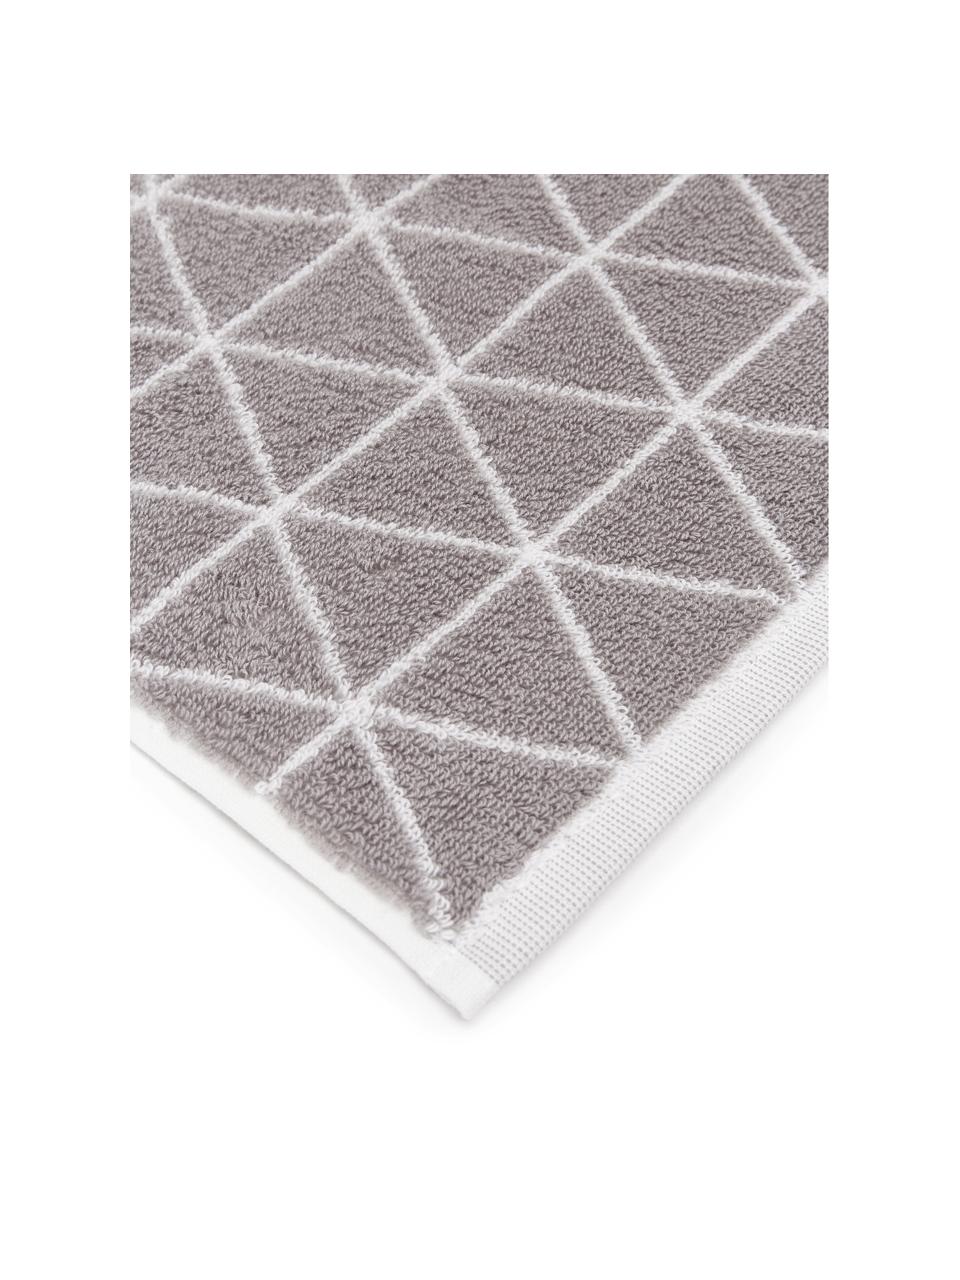 Asciugamano reversibile con motivo grafico Elina 2 pz, Taupe, bianco crema, Asciugamano, Larg. 50 x Lung. 100 cm, 2 pz